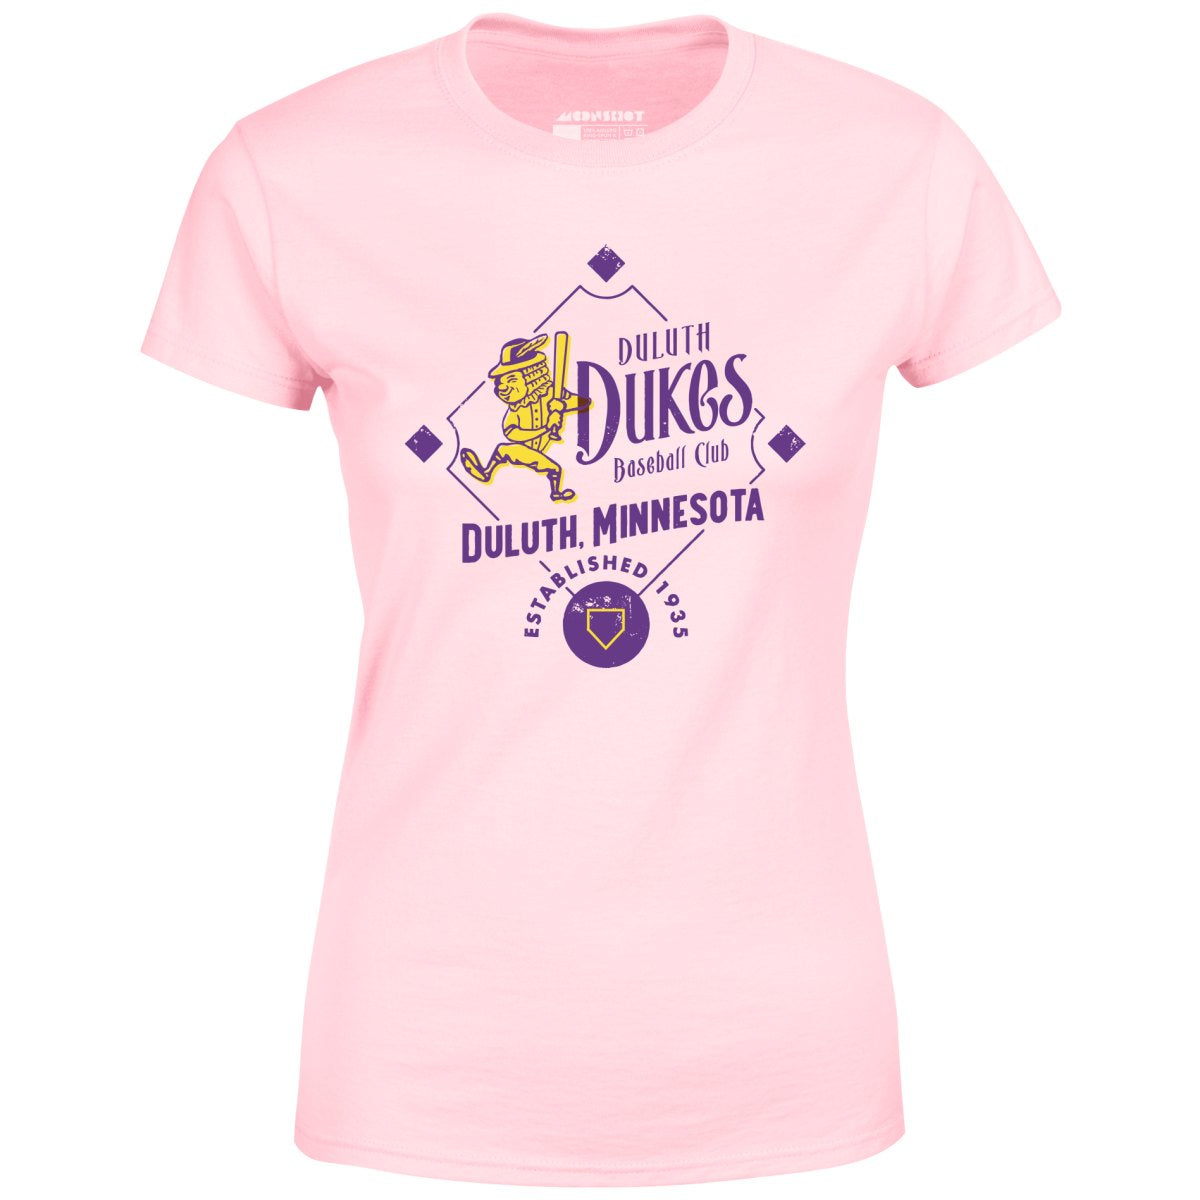 Duluth Dukes - Minnesota - Vintage Defunct Baseball Teams - Women's T-Shirt